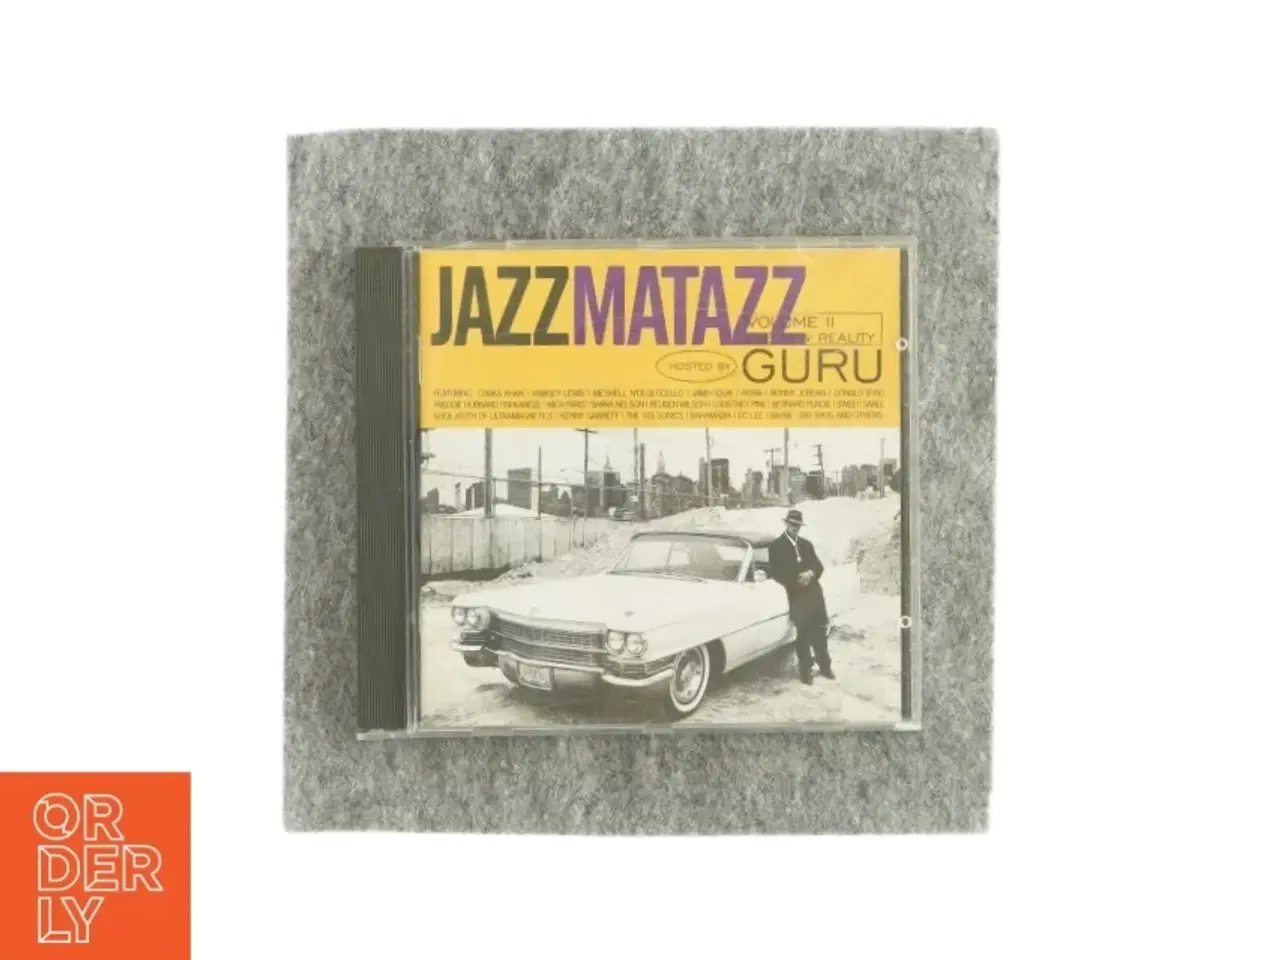 Billede 1 - Cd med Jazzmatazz